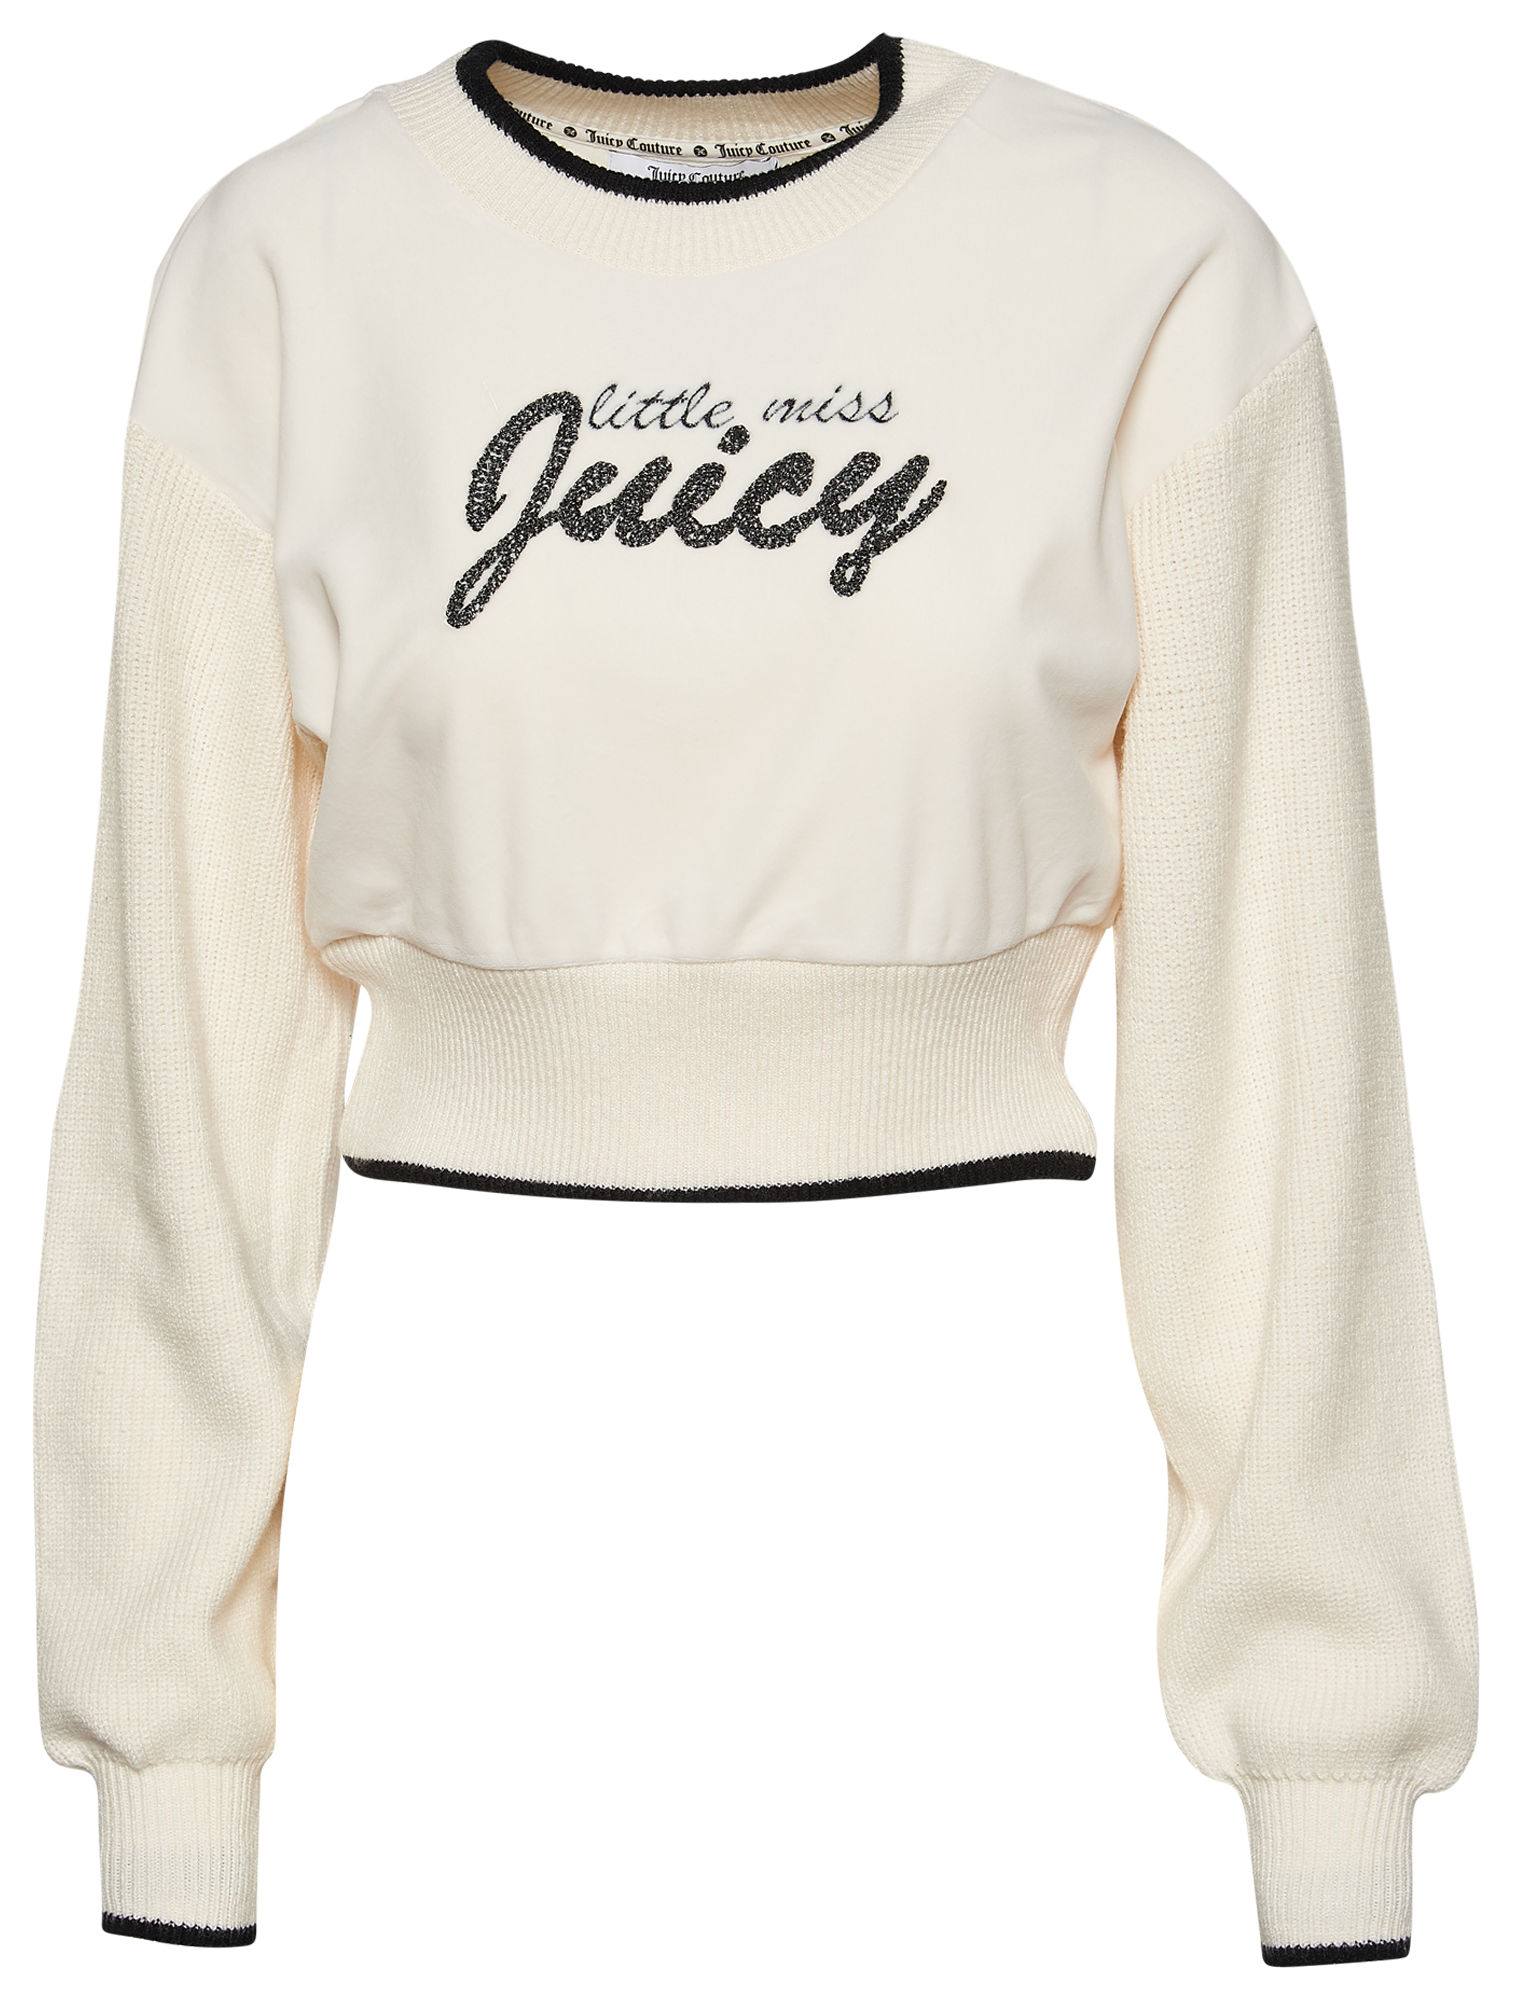 Juicy Couture Cropped Velour Sweatshirt - Women's